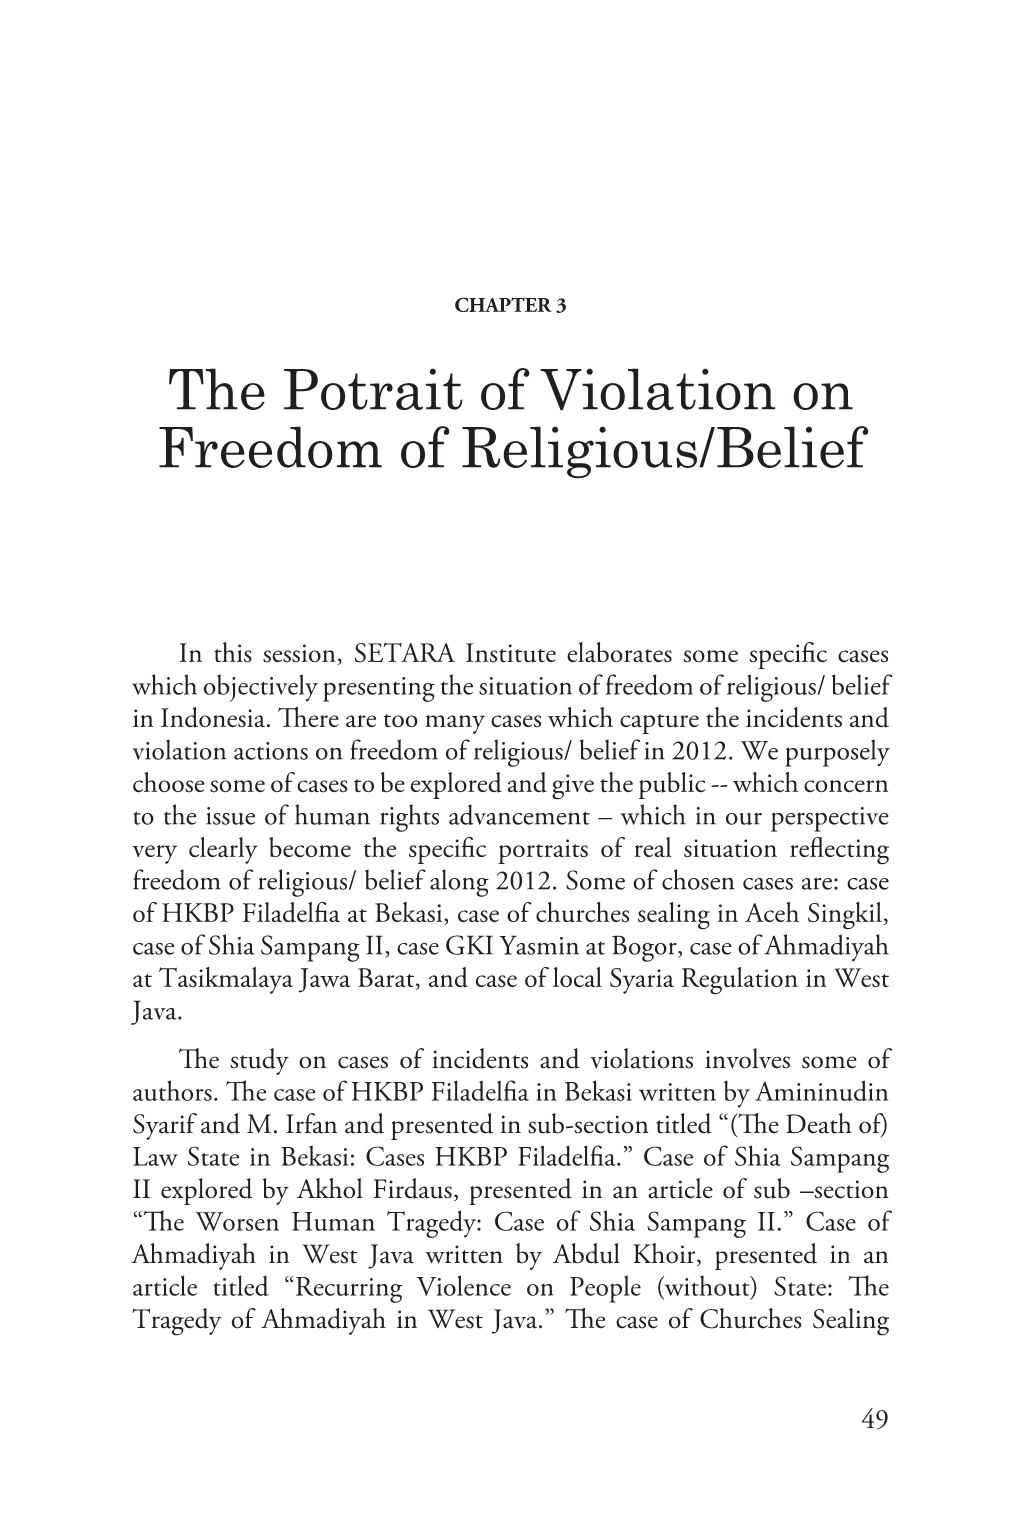 The Potrait of Violation on Freedom of Religious/Belief